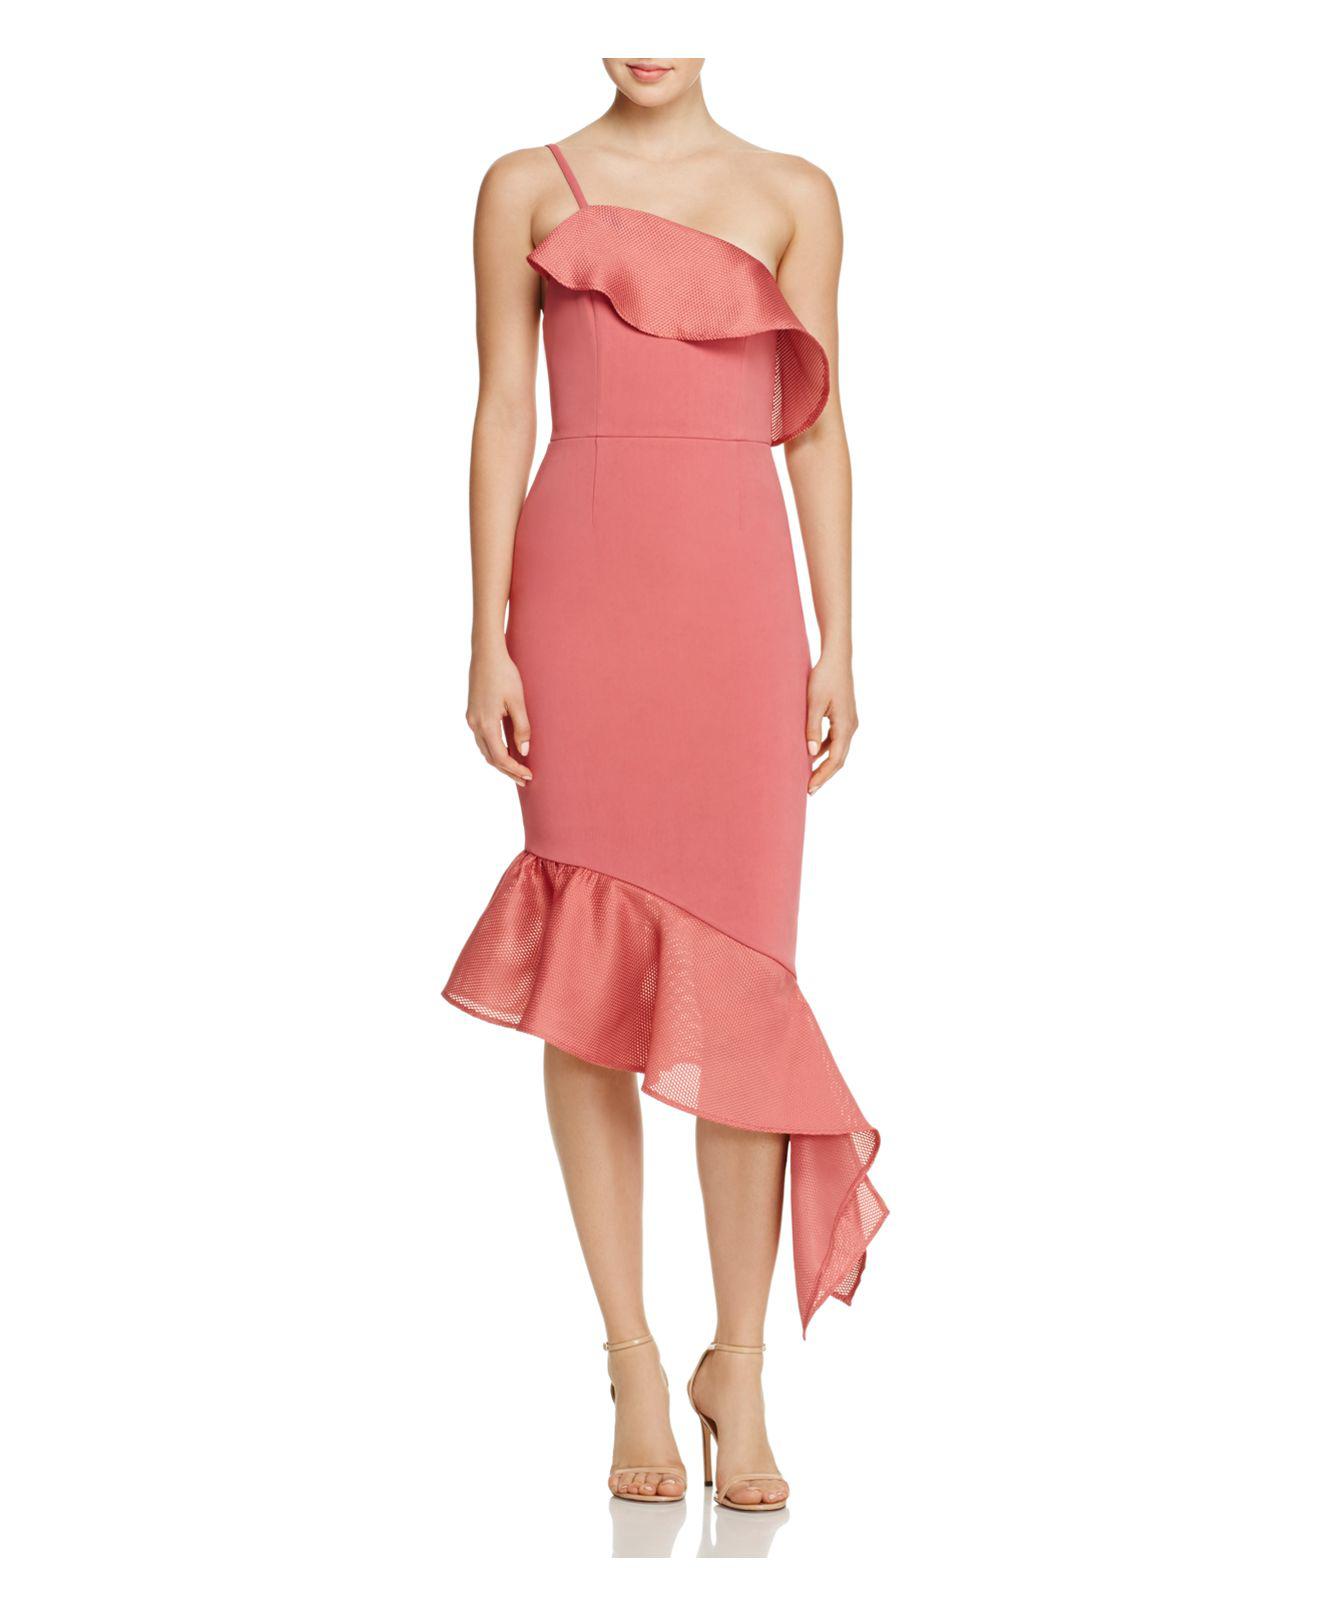 Lyst - La Maison Talulah Expression Asymmetric Ruffle Dress in Pink